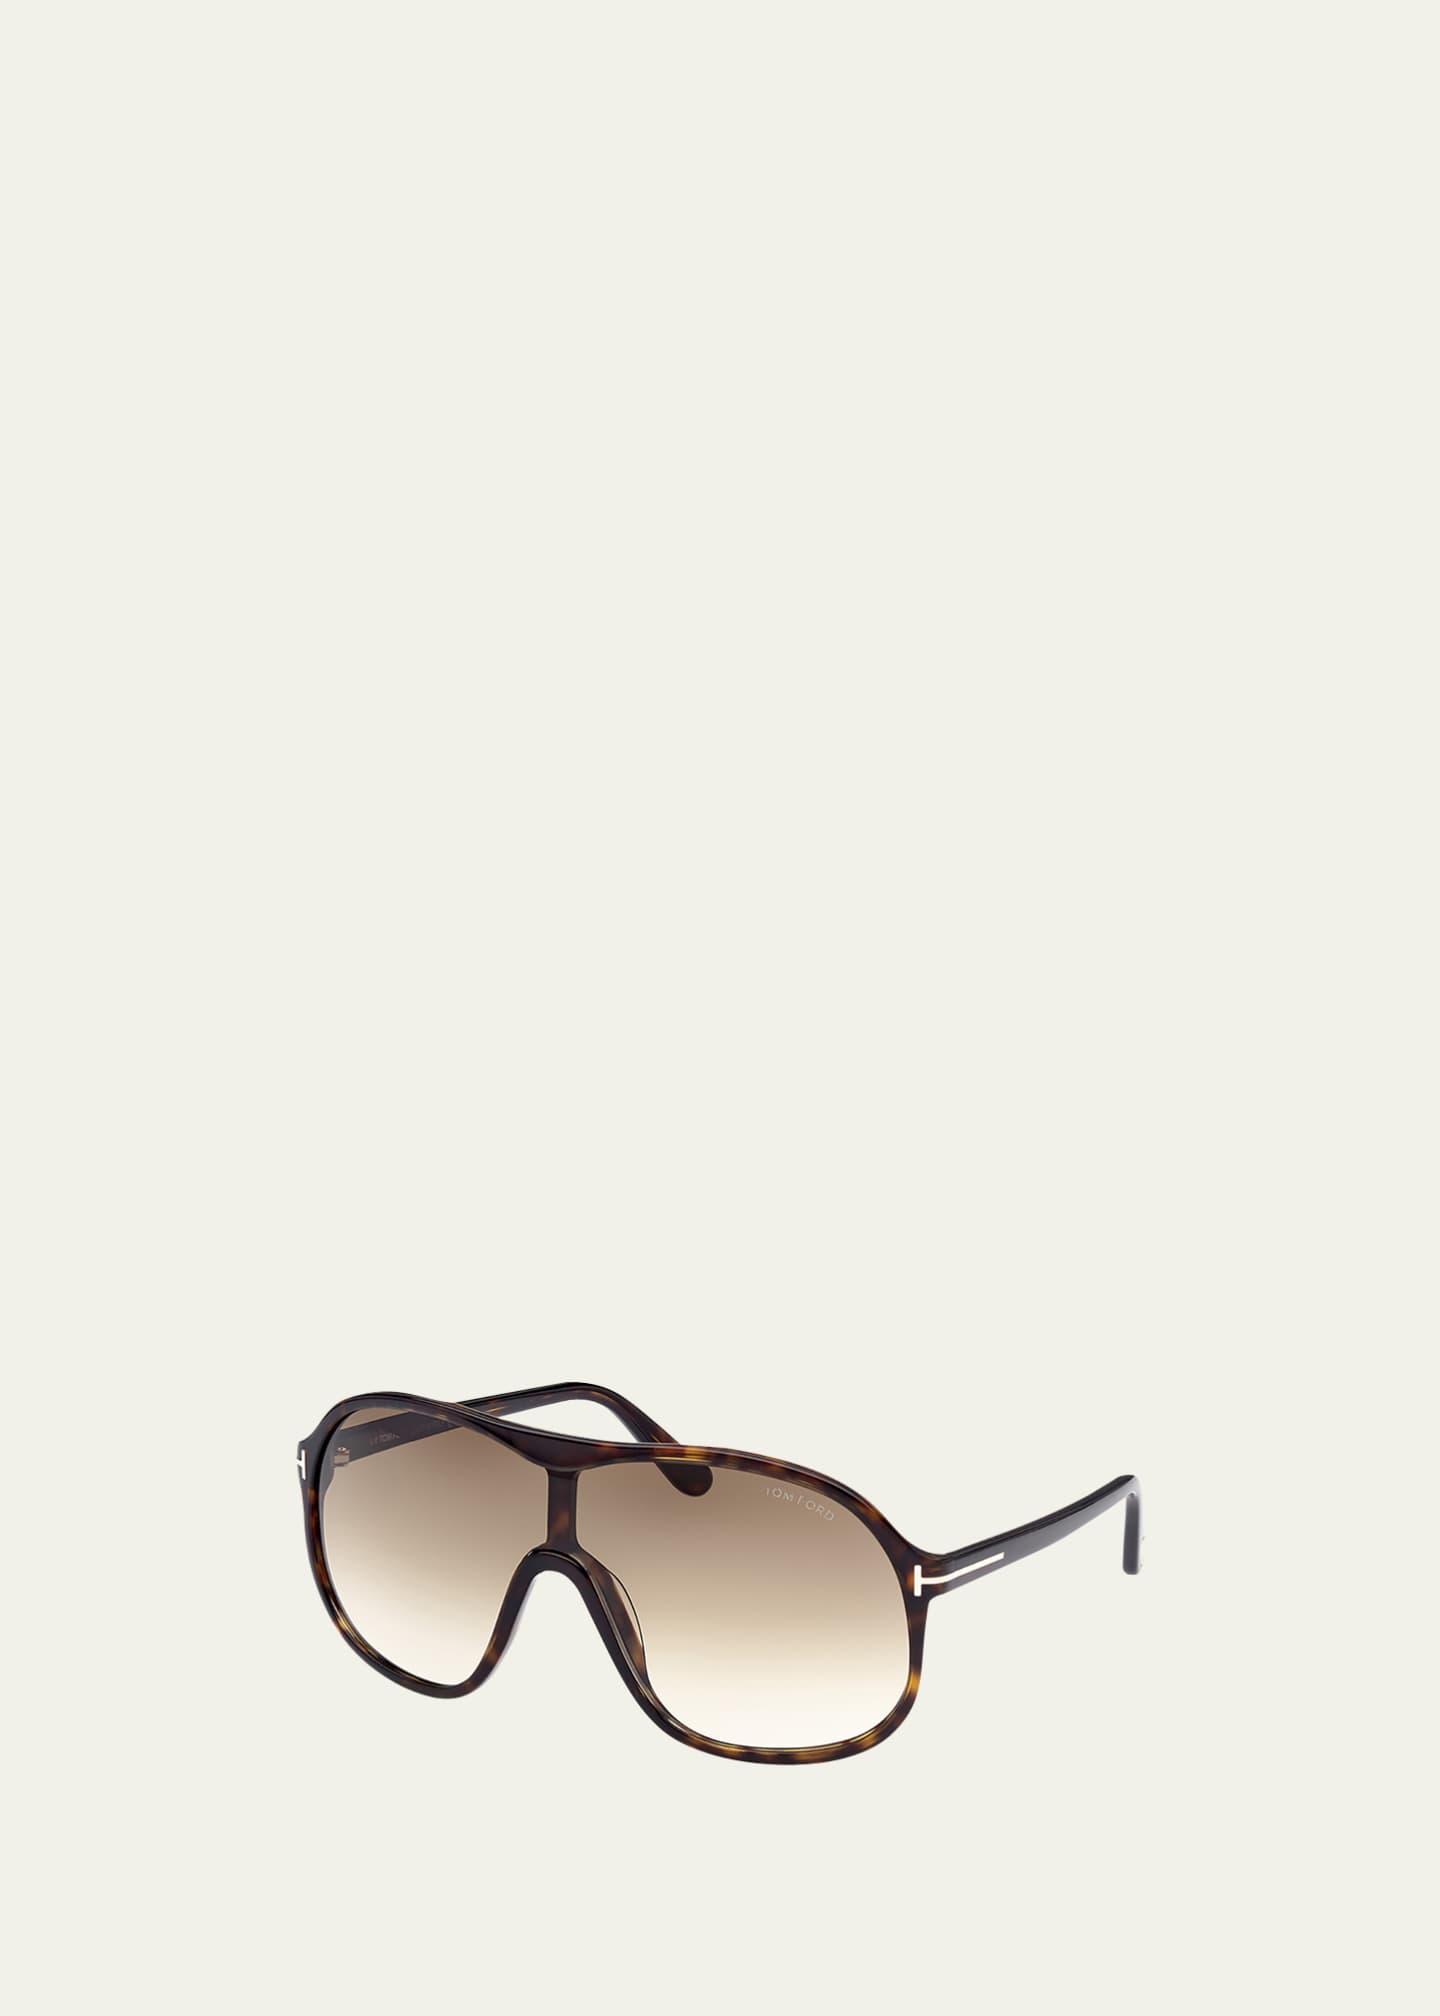 Tom Ford Men S Drew Aviator Sunglasses Bergdorf Goodman